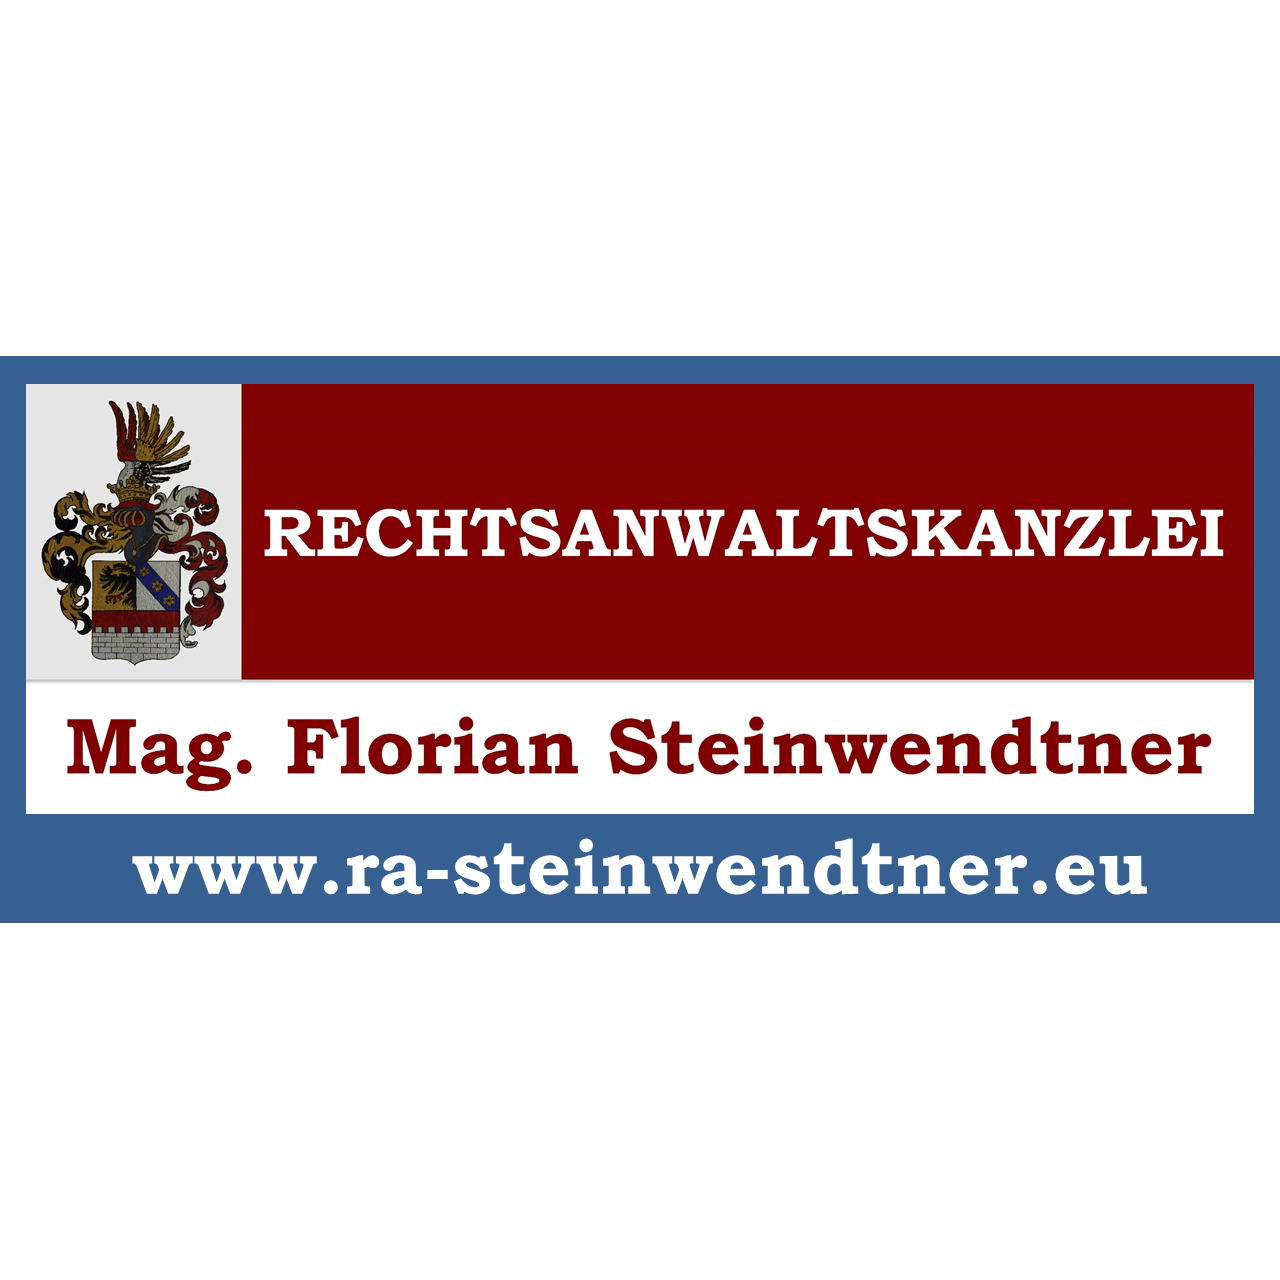 Rechtsanwaltskanzlei - Mag. Florian Steinwendtner Logo